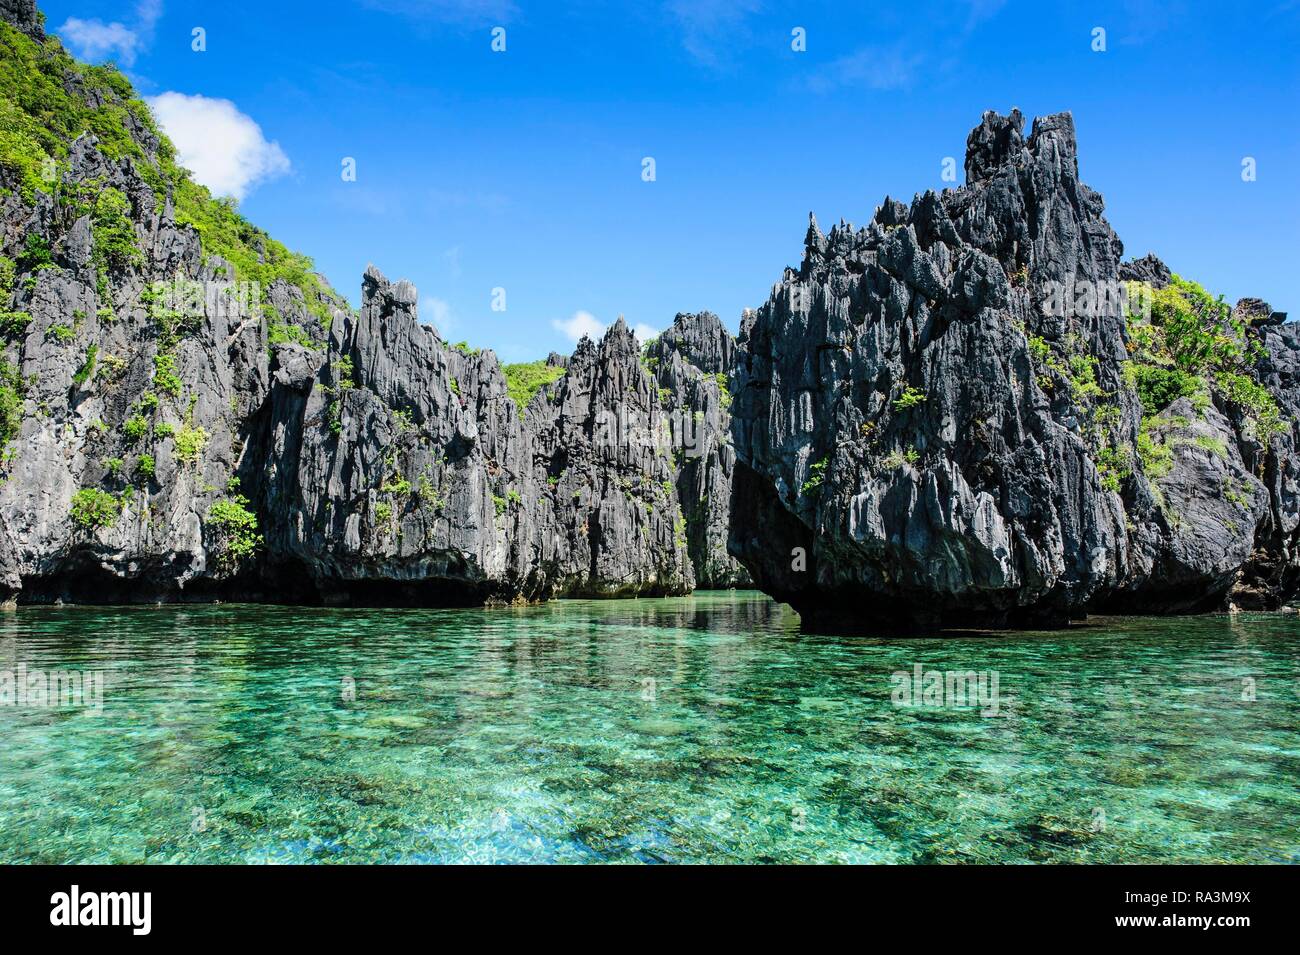 Kristallklares Wasser mit Kalksteinen, Bacuit Archipel, El Nido, Palawan, Philippinen Stockfoto